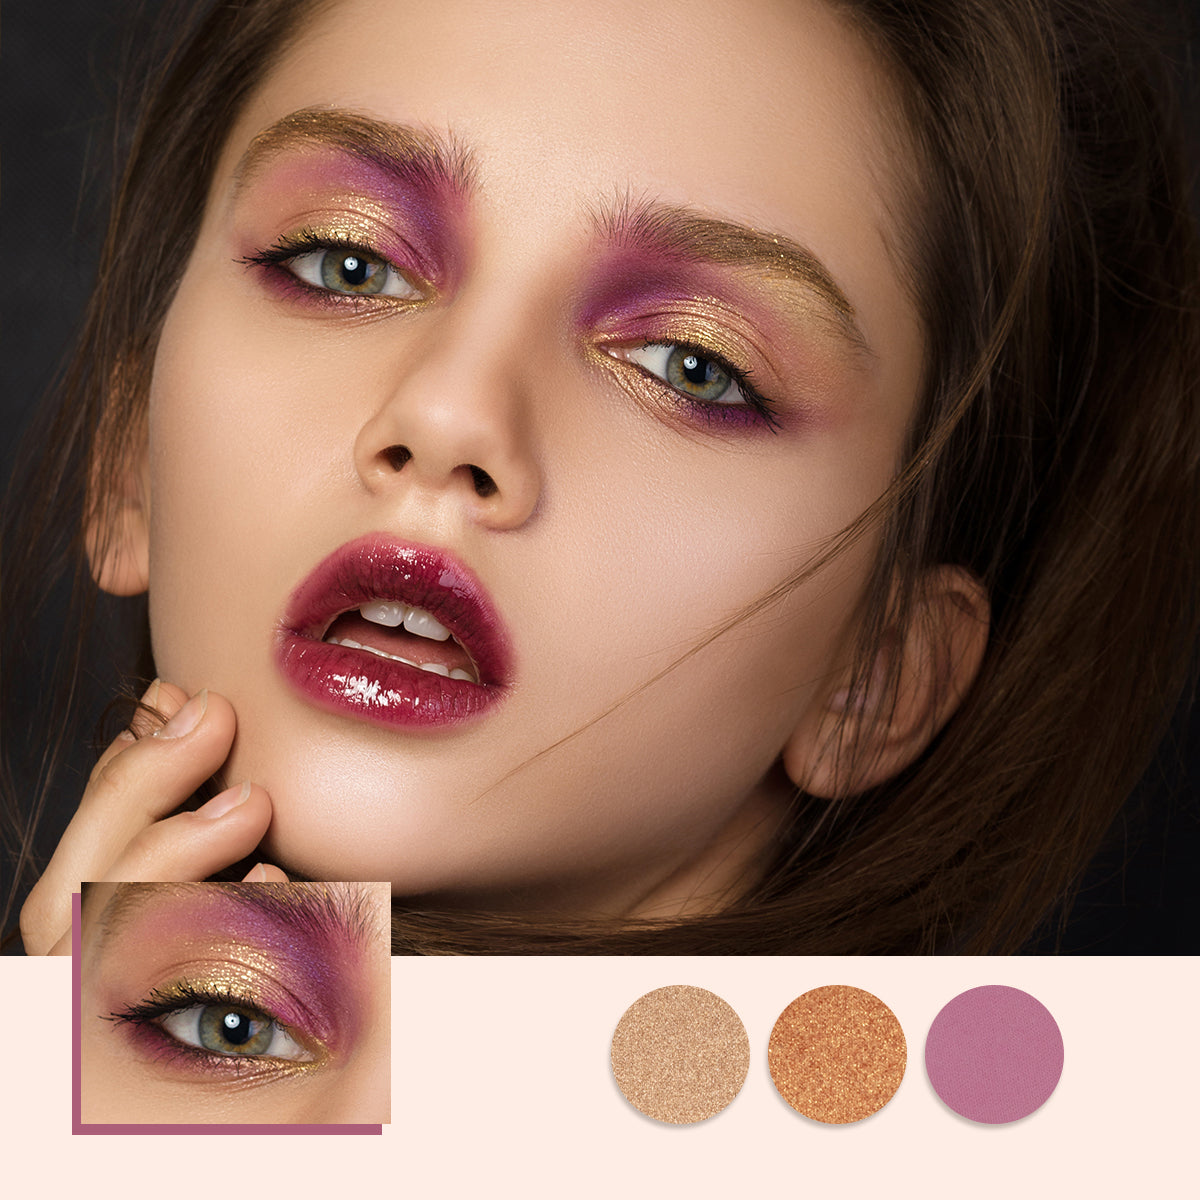 Catkin Flourishing Eyeshadow Palette C10 Macaron Pink Purple Matte Shimmer Glitter Eyeshadow Pigmented Eye Makeup Palette